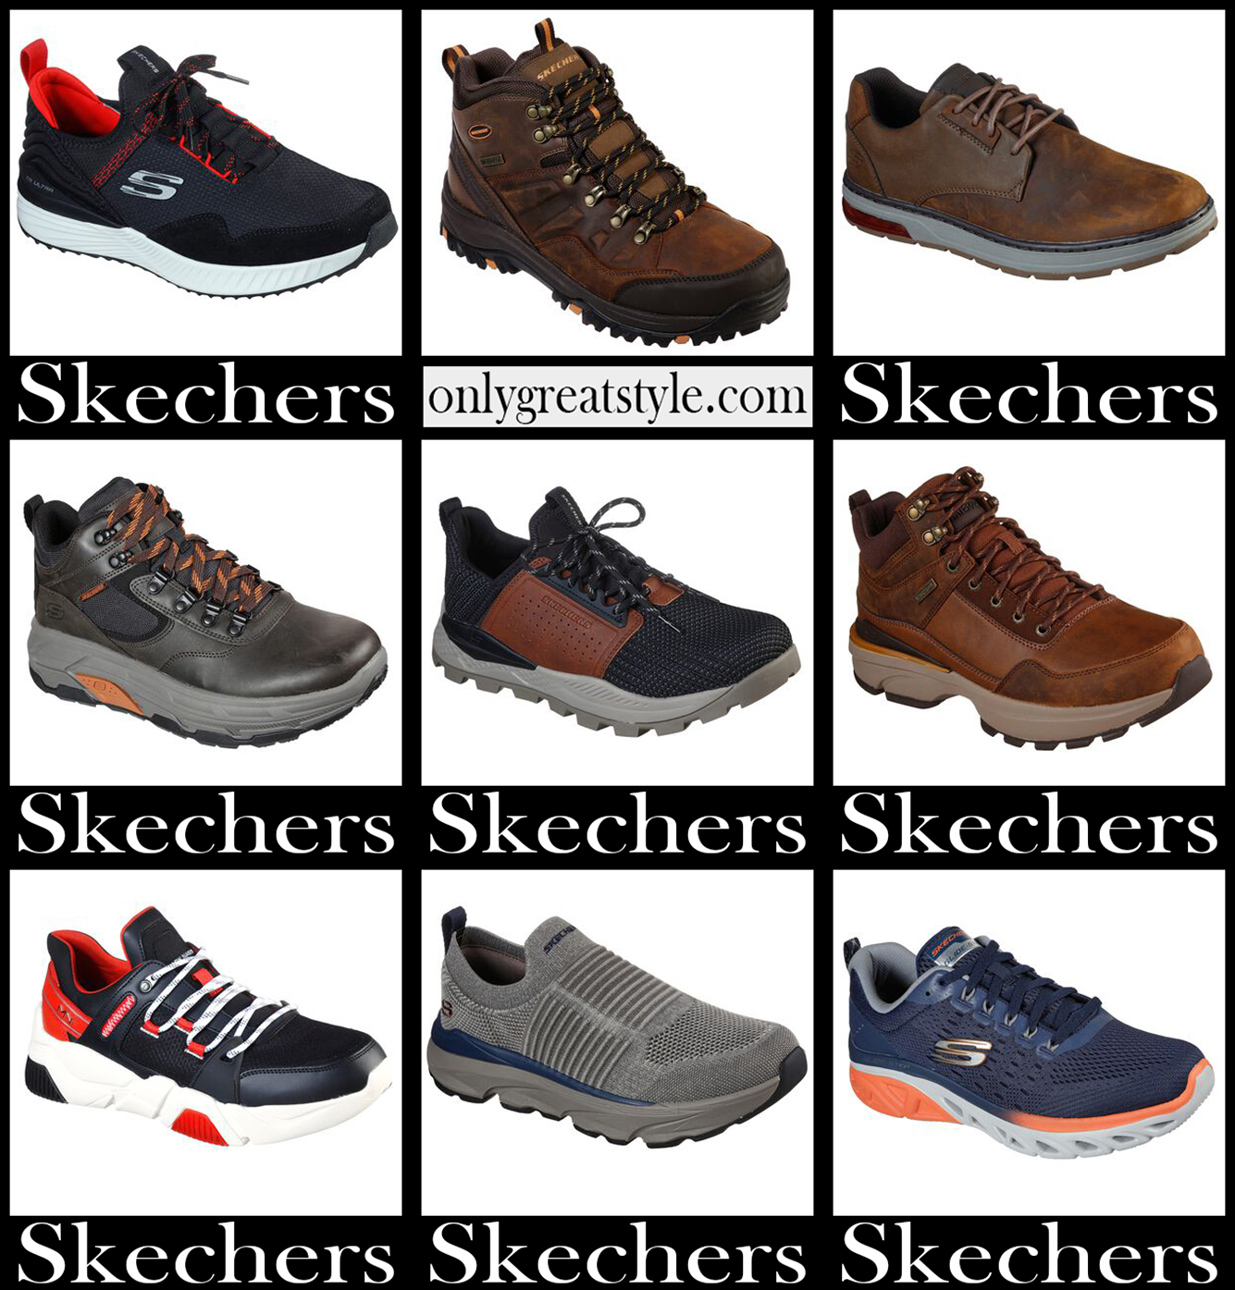 skechers winter shoes mens